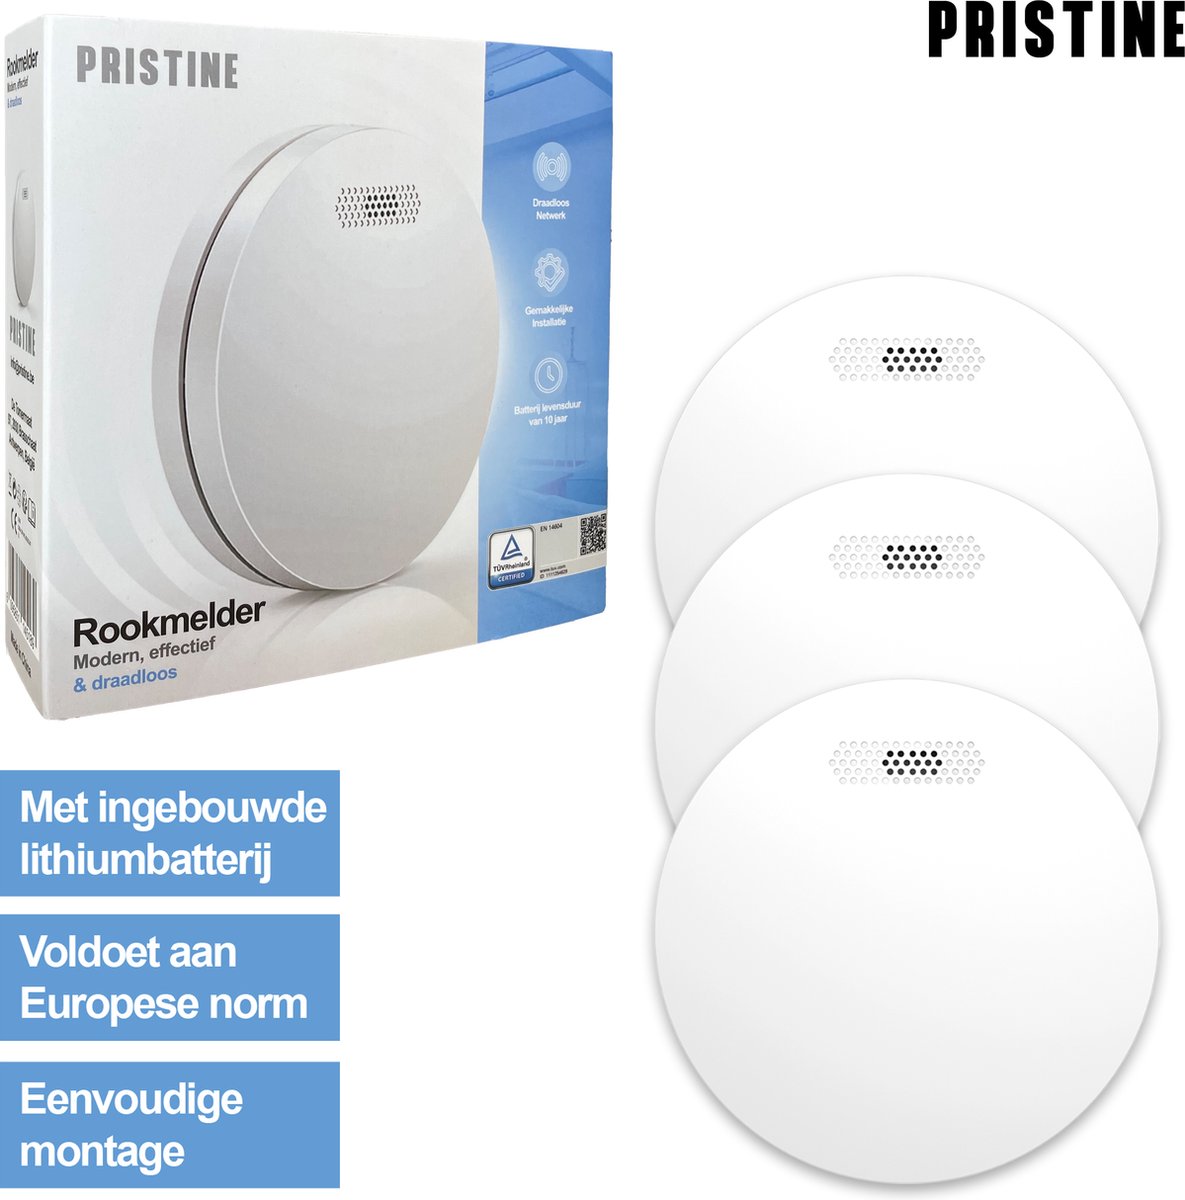 PRISTINE - 3 PACK - Slimme Rookmelders met 10 Jaar Batterij en Magneet Montage - Rookmelder Koppelbaar - WiFi - 10 jaar batterij - Voldoet aan Europese norm EN14604